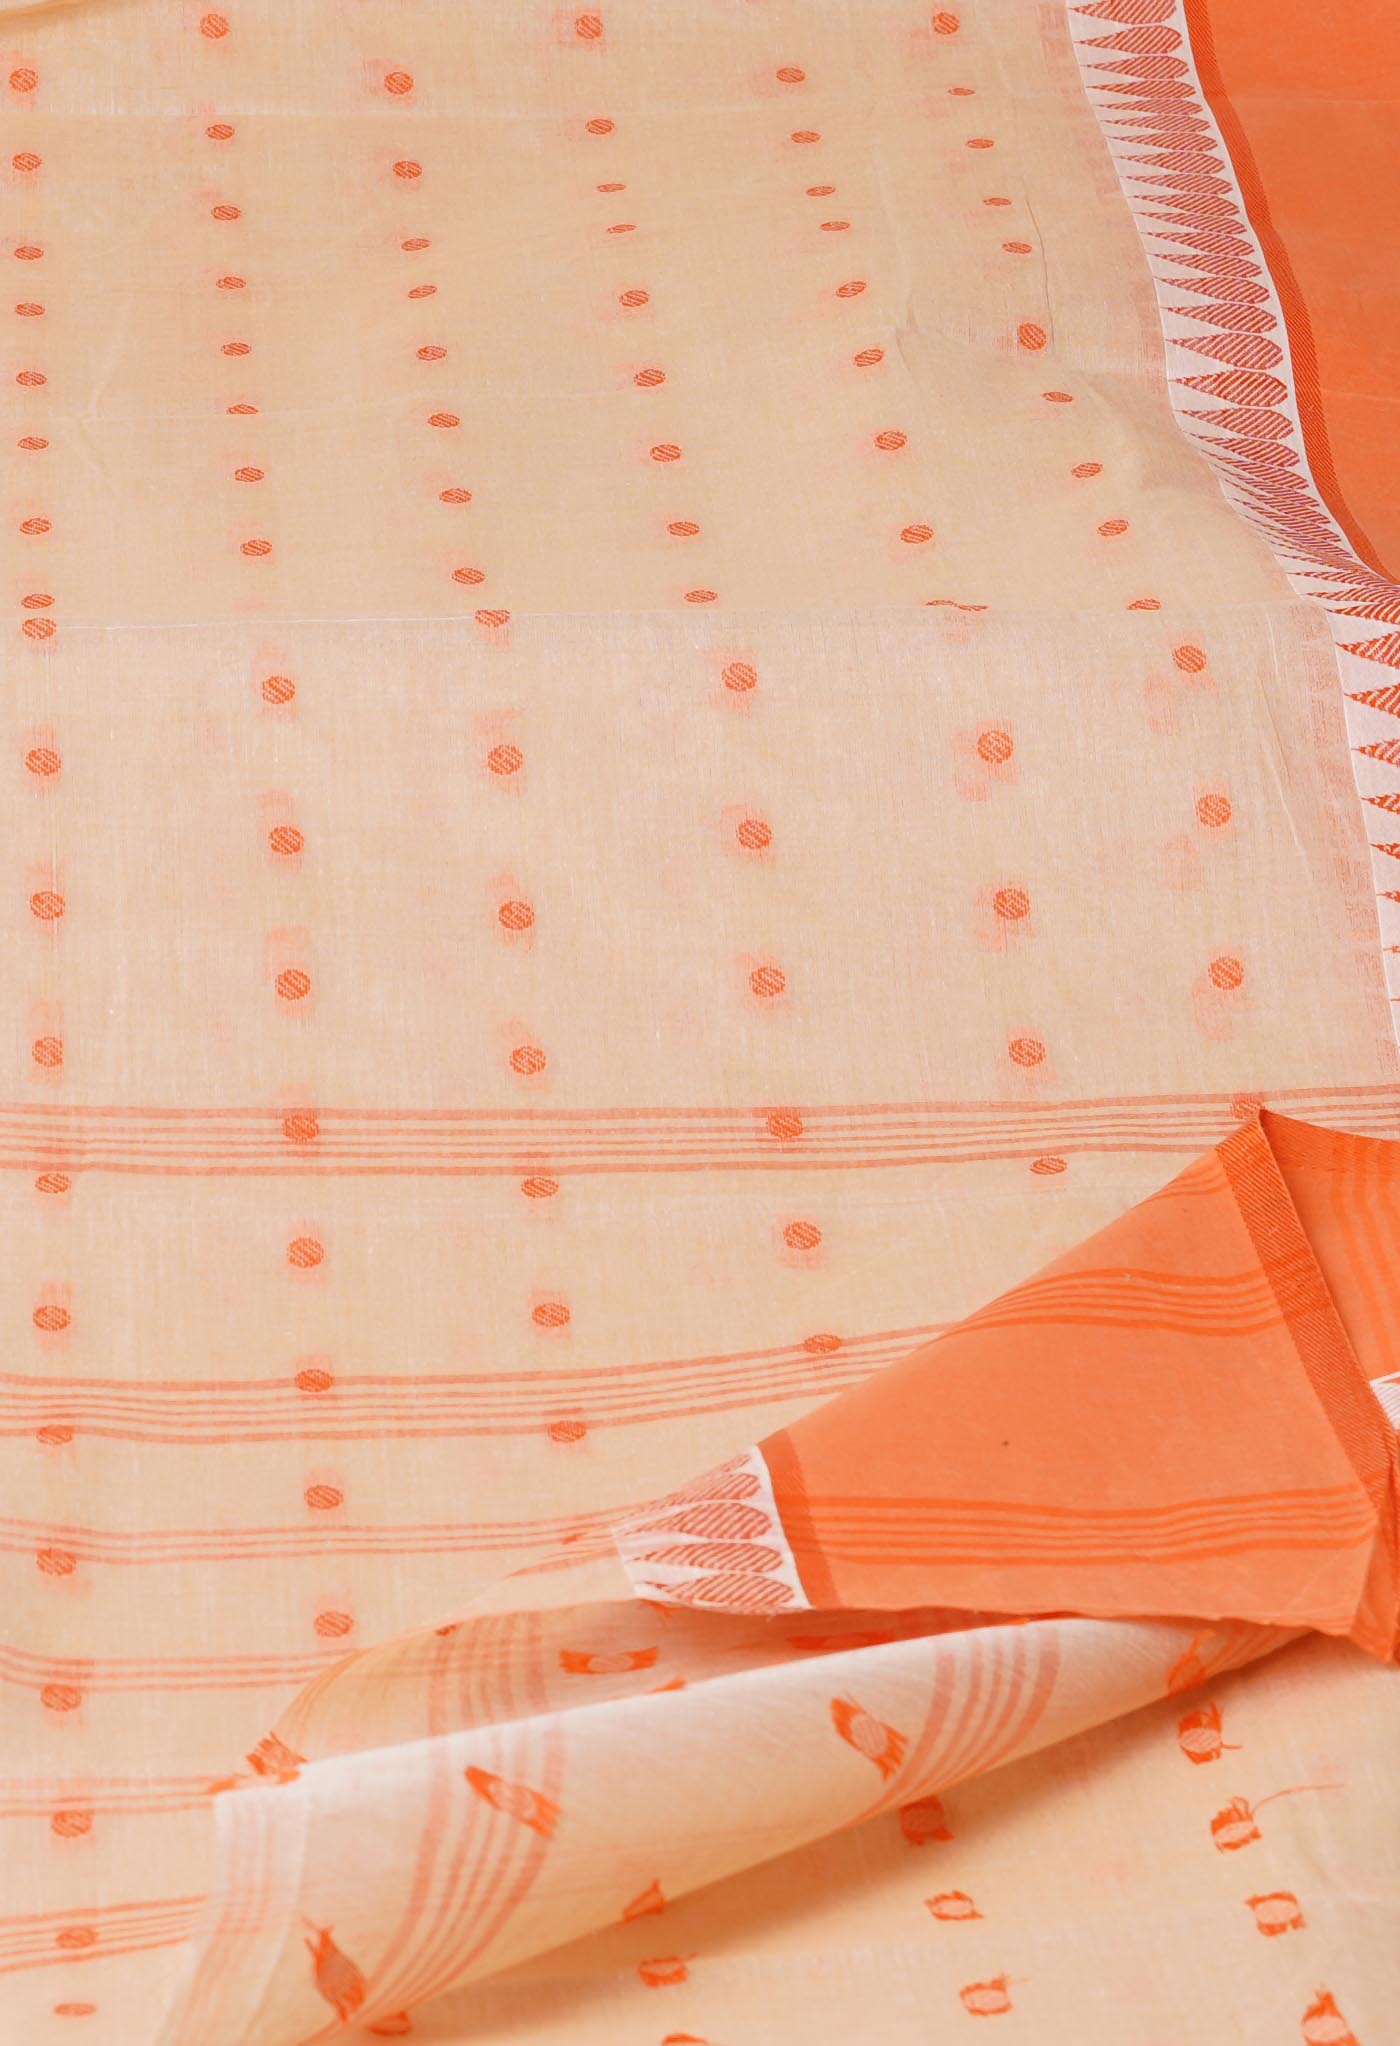 Pastel Orange Pure Handloom Superfine Bengal Cotton Saree